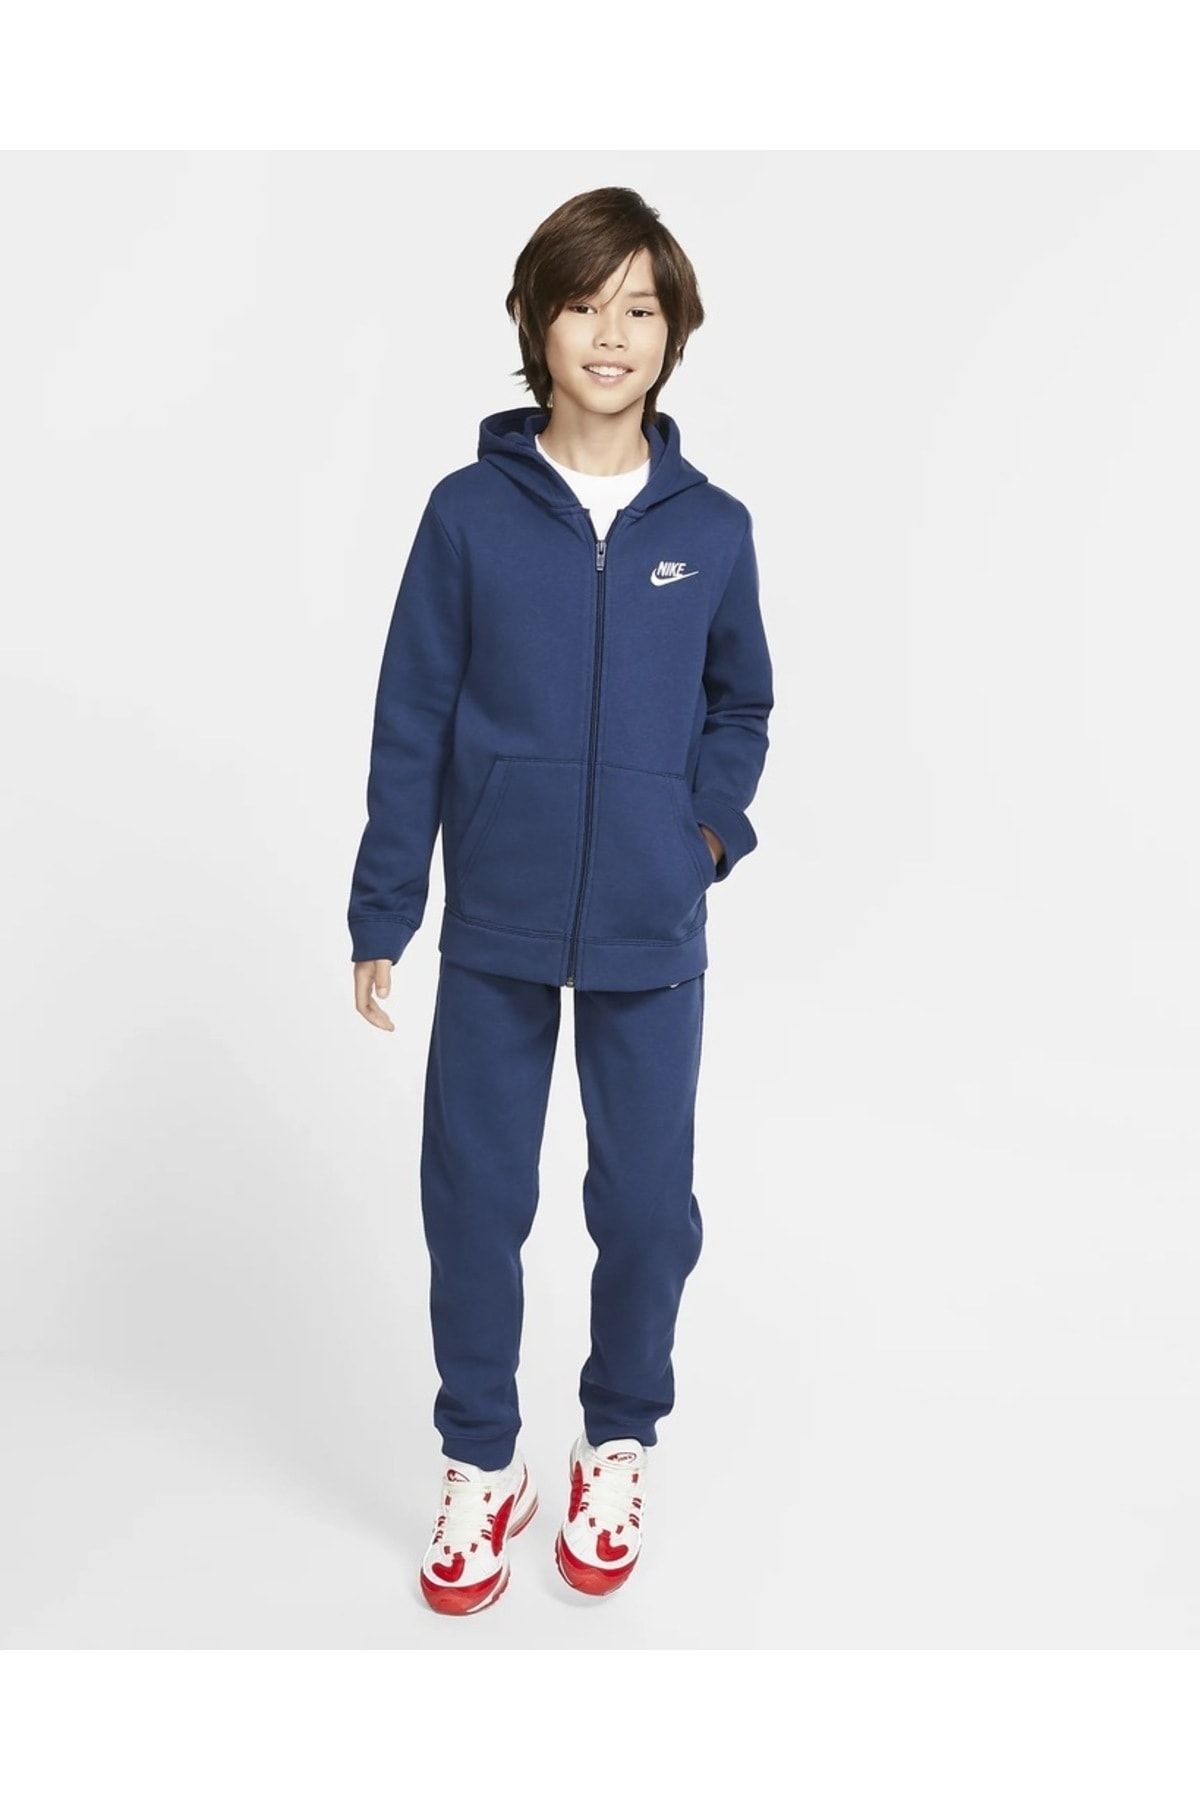 Nike Size XS Boy Sweatshirts & Hoodies for Boys CJ4342-410